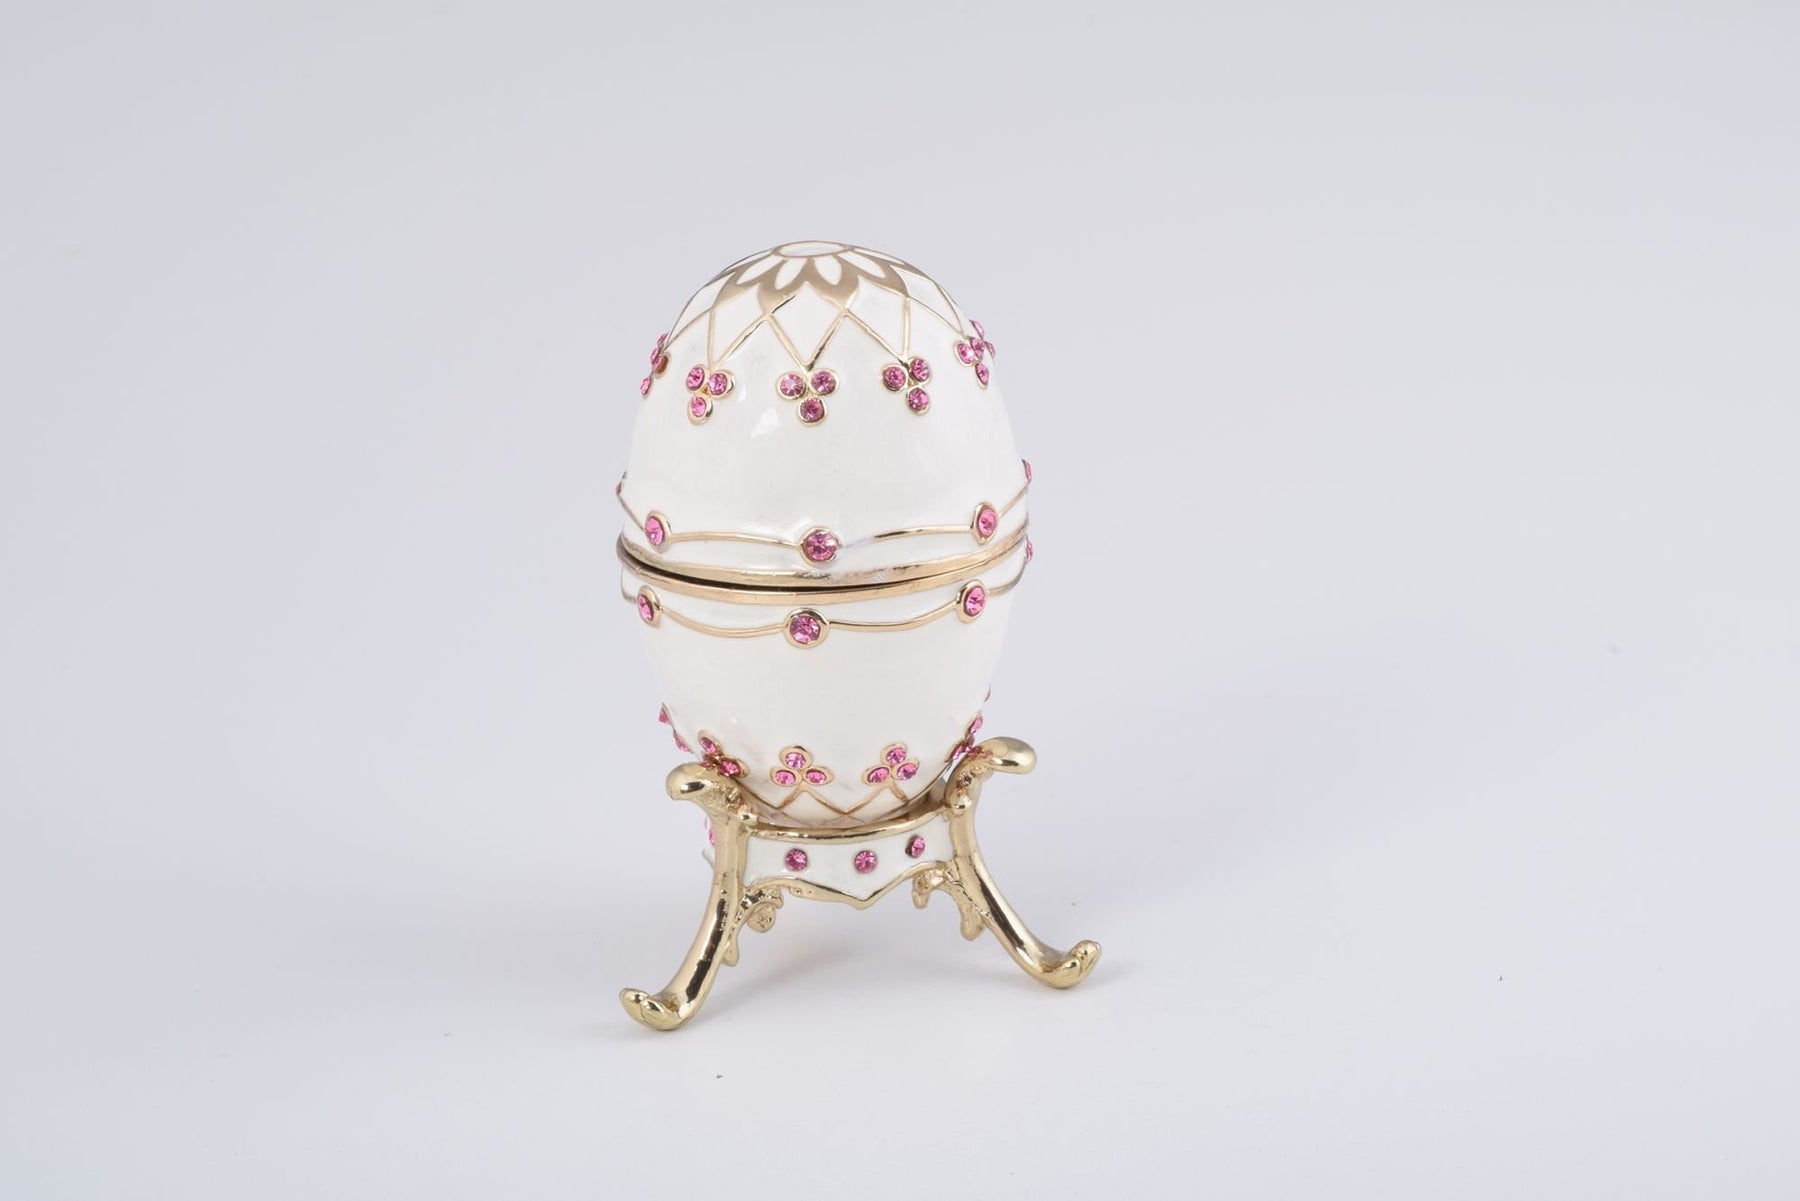 Keren Kopal White Faberge Egg with Pink Crystals  56.25